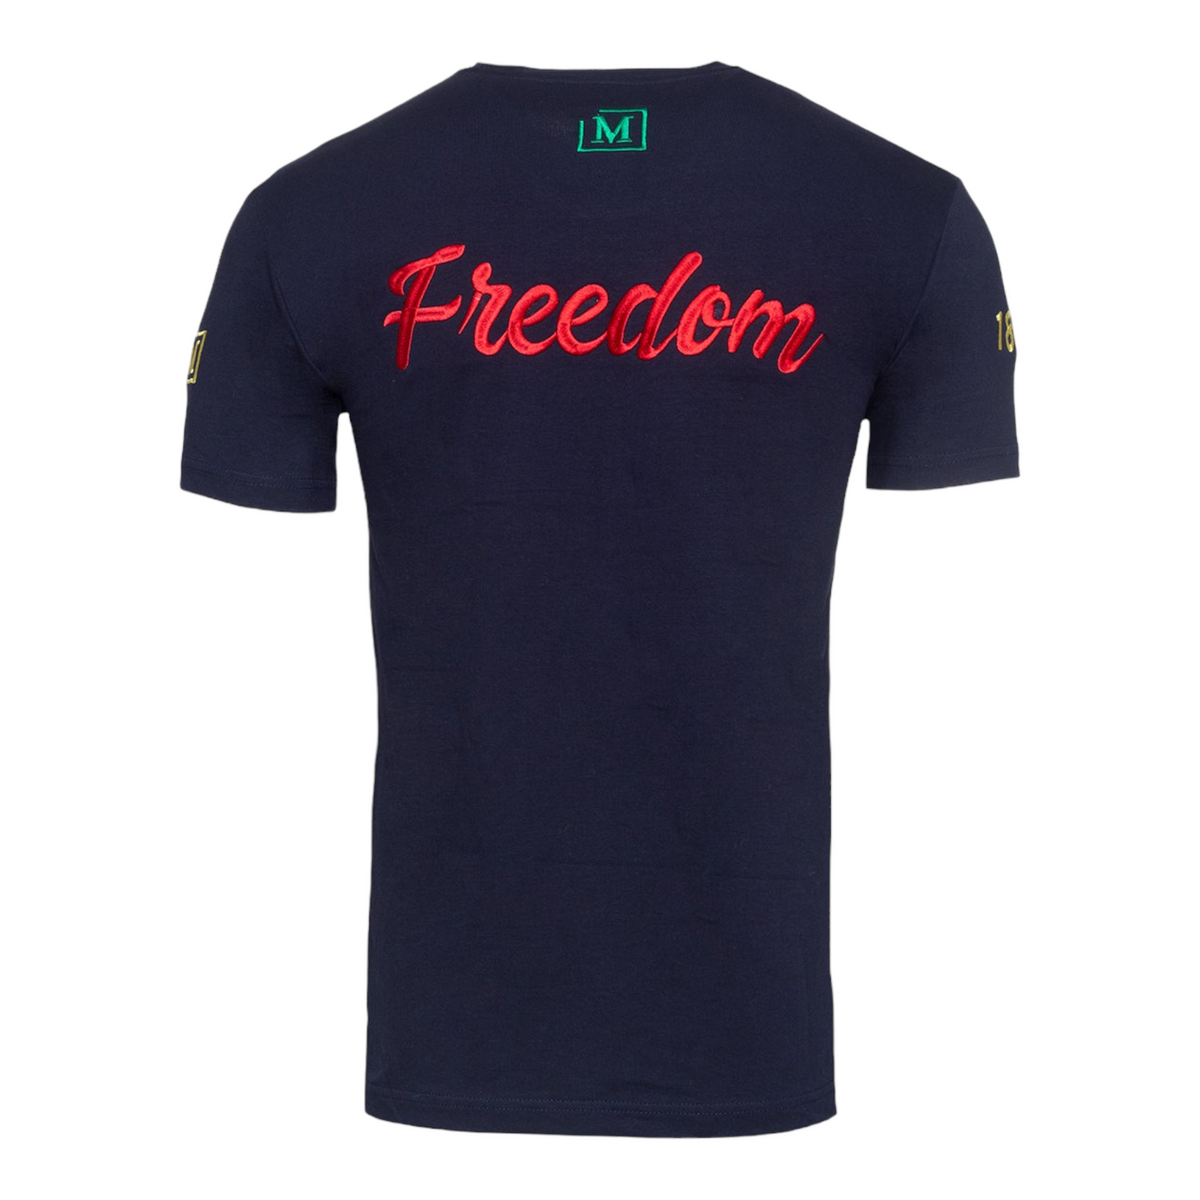 MDB Brand Men's Freedom T-Shirt